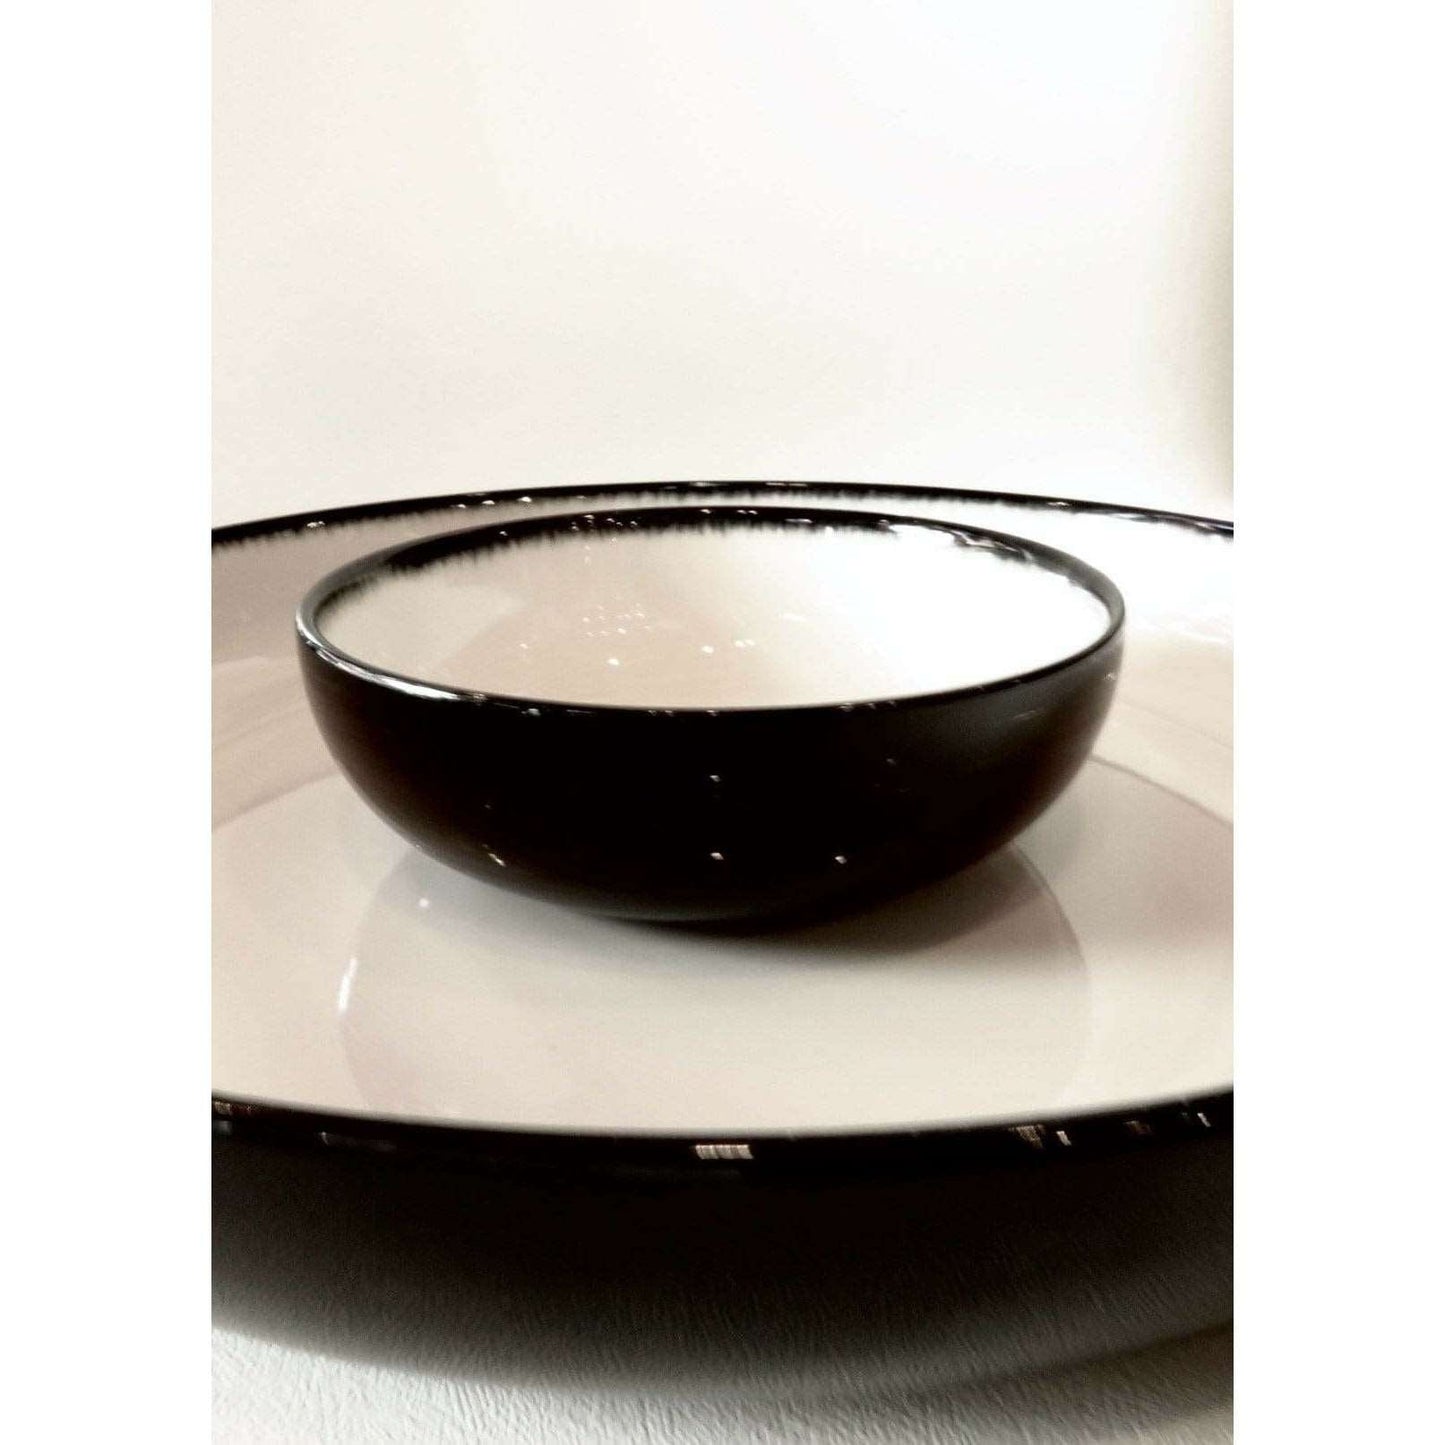 Ann Demeulemeester Home High Plate 27 centimeters / Off-white & black / Porcelain Ann Demeulemeester for Serax 27 cm High Plates (set of two)